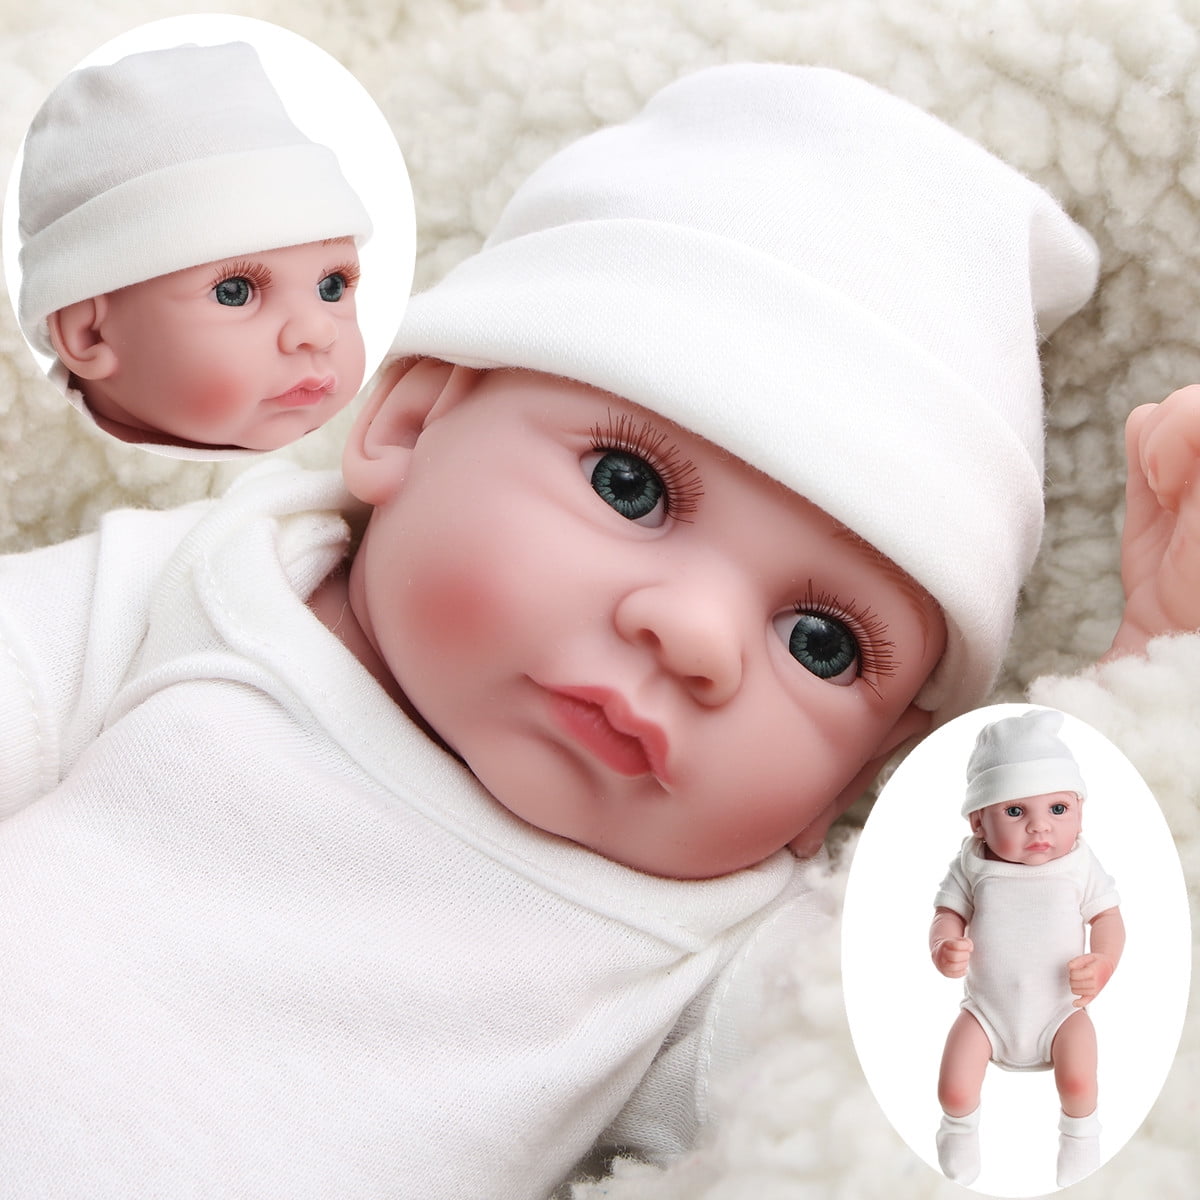 10'' Full Vinyl Silicone Reborn Baby Doll Girl Newborn Toddler Bathing Toy Gift 